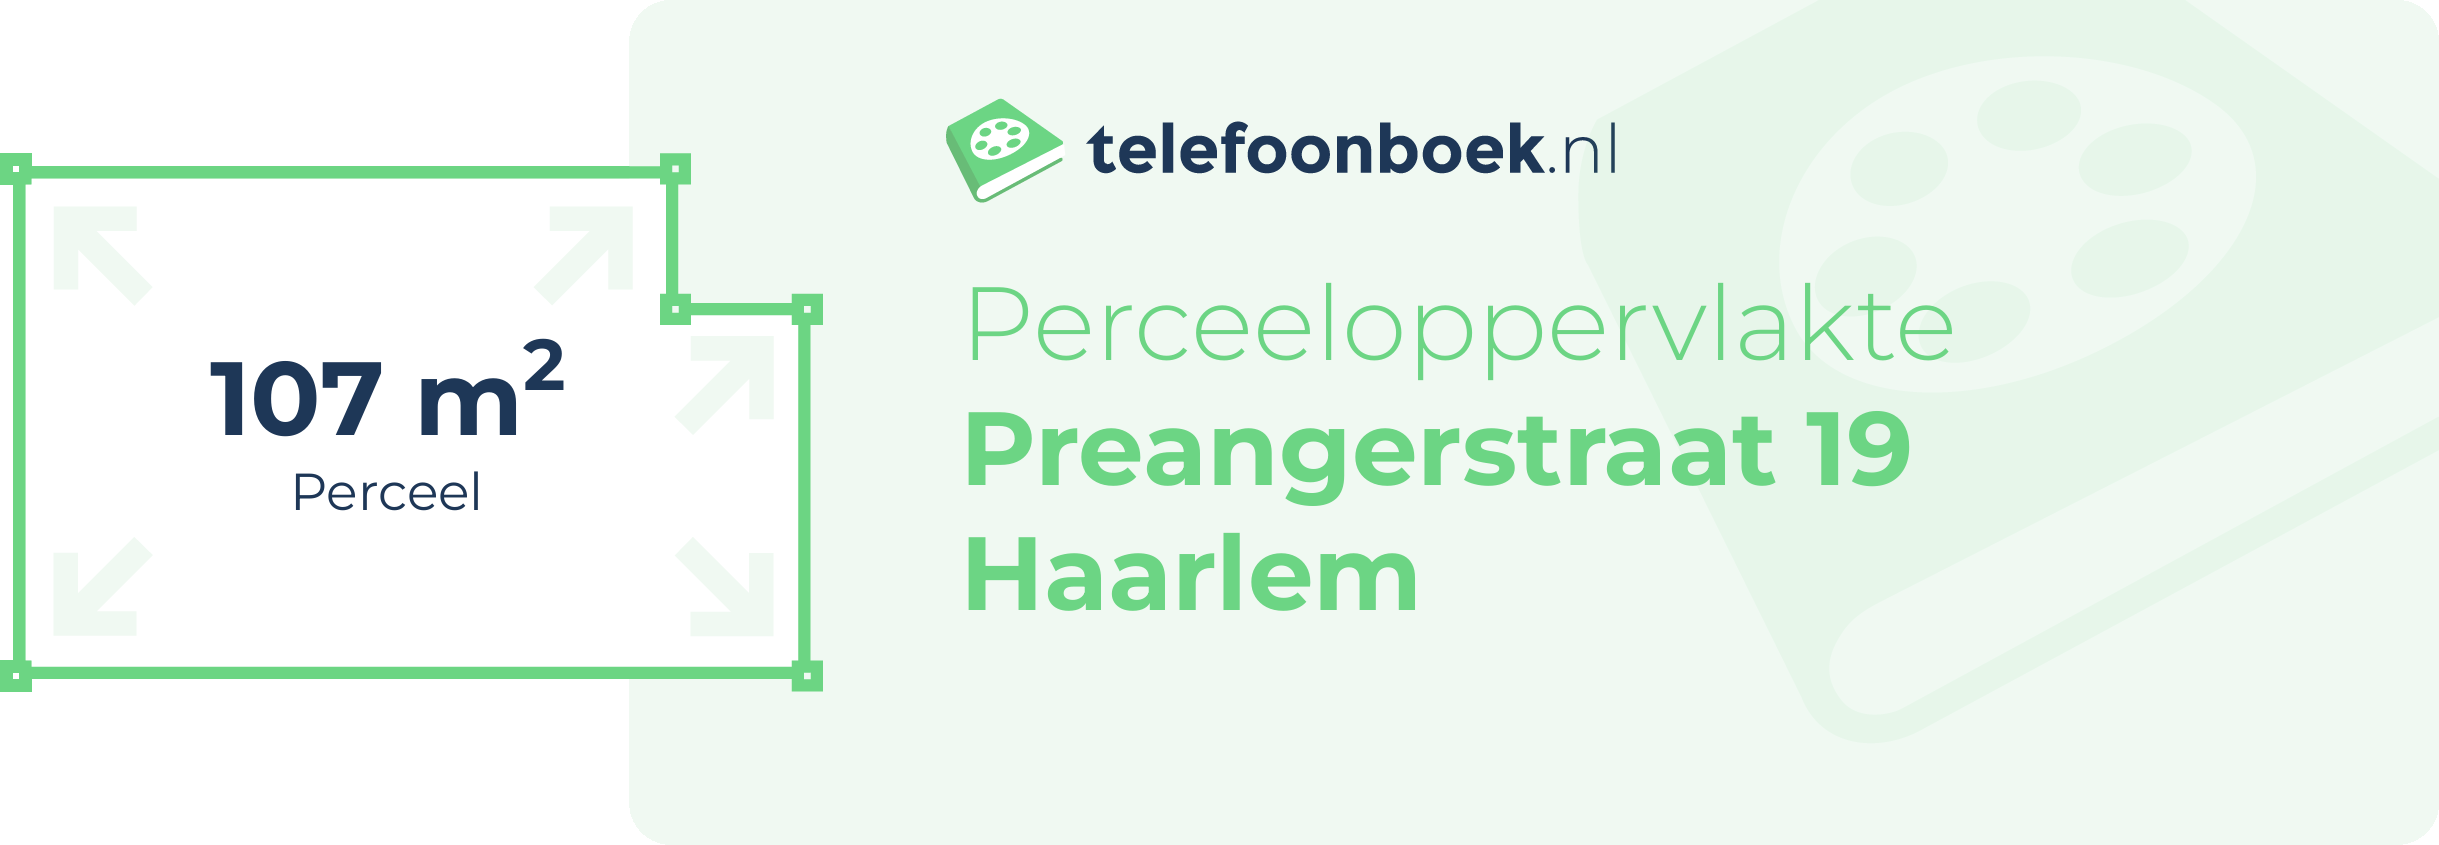 Perceeloppervlakte Preangerstraat 19 Haarlem